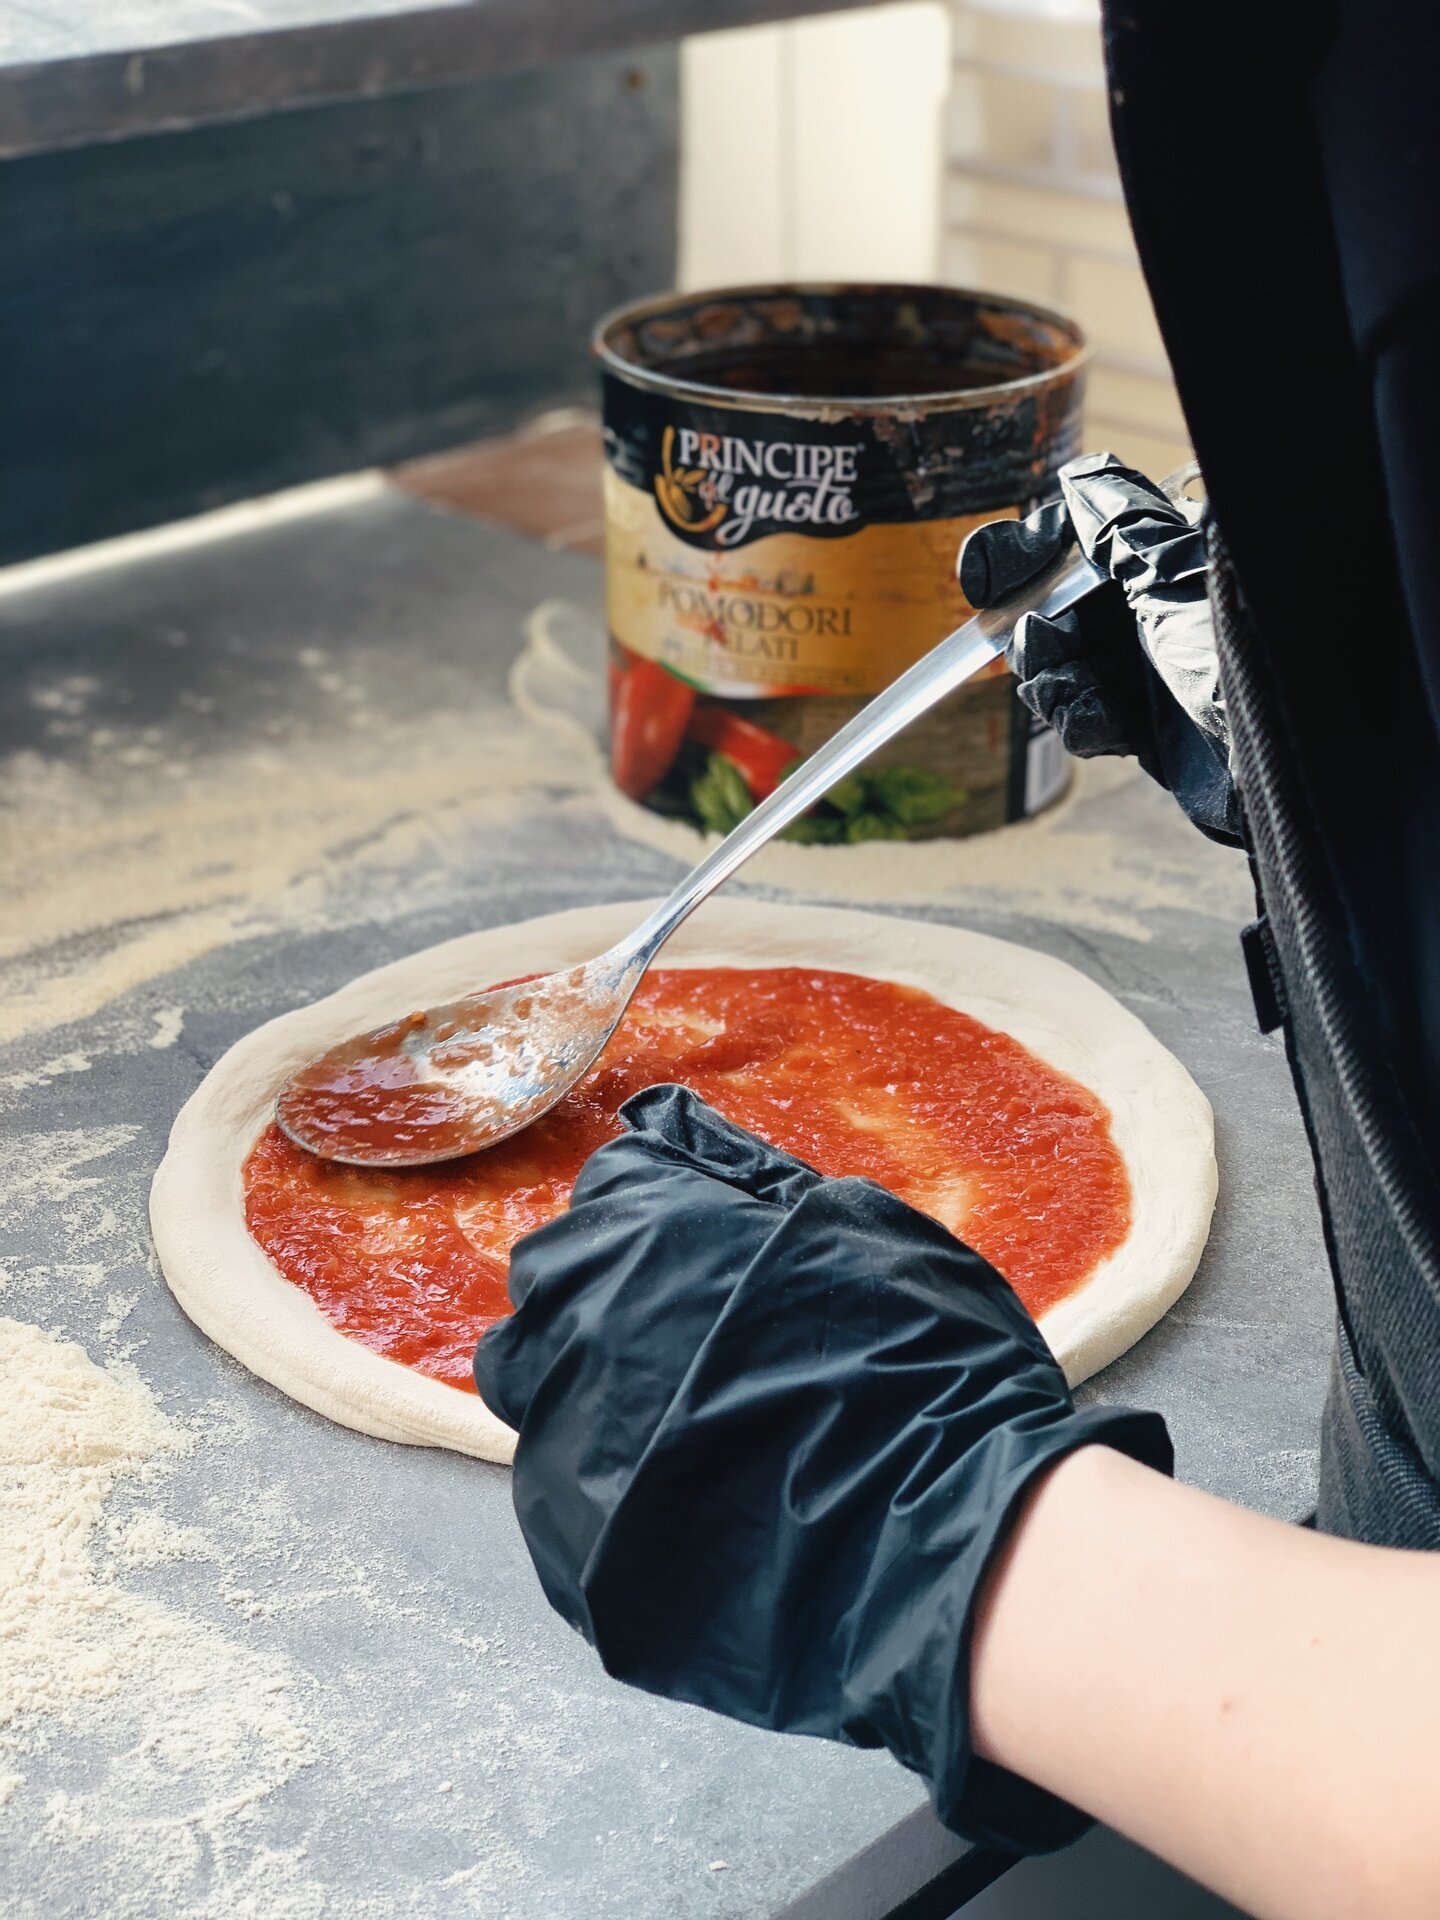 Hütt kodurestorani pitsa valmistamise töötuba - ahjuks ettev